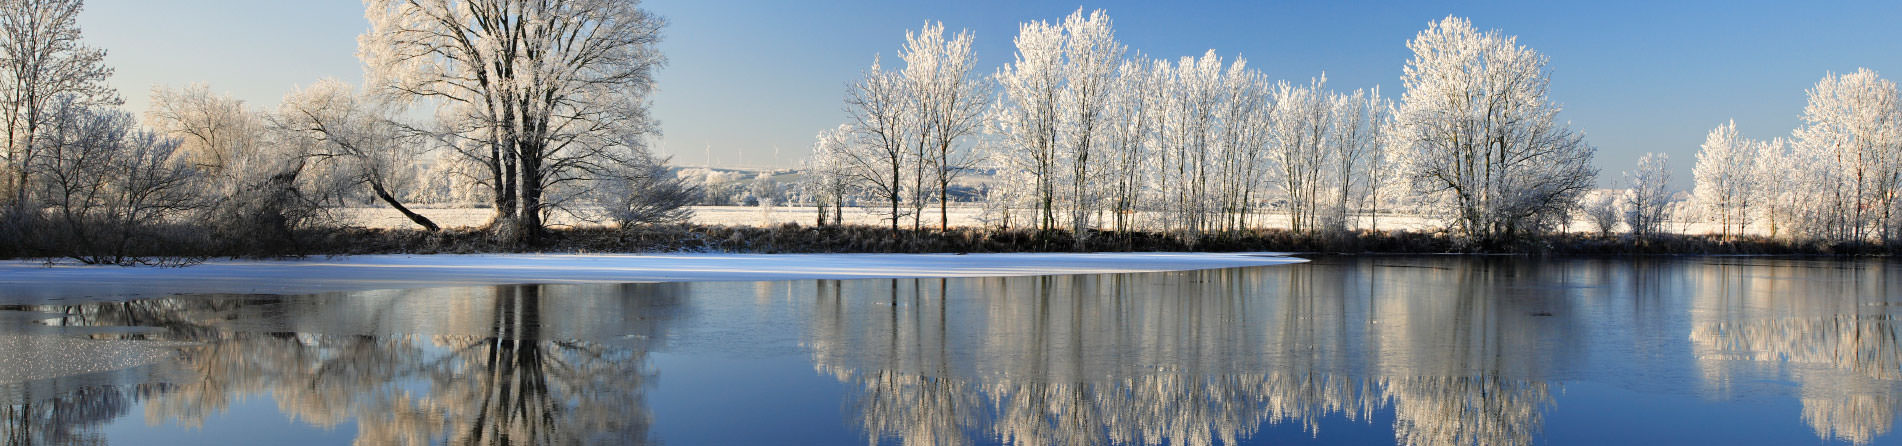 Winter-pond-home-header.jpg